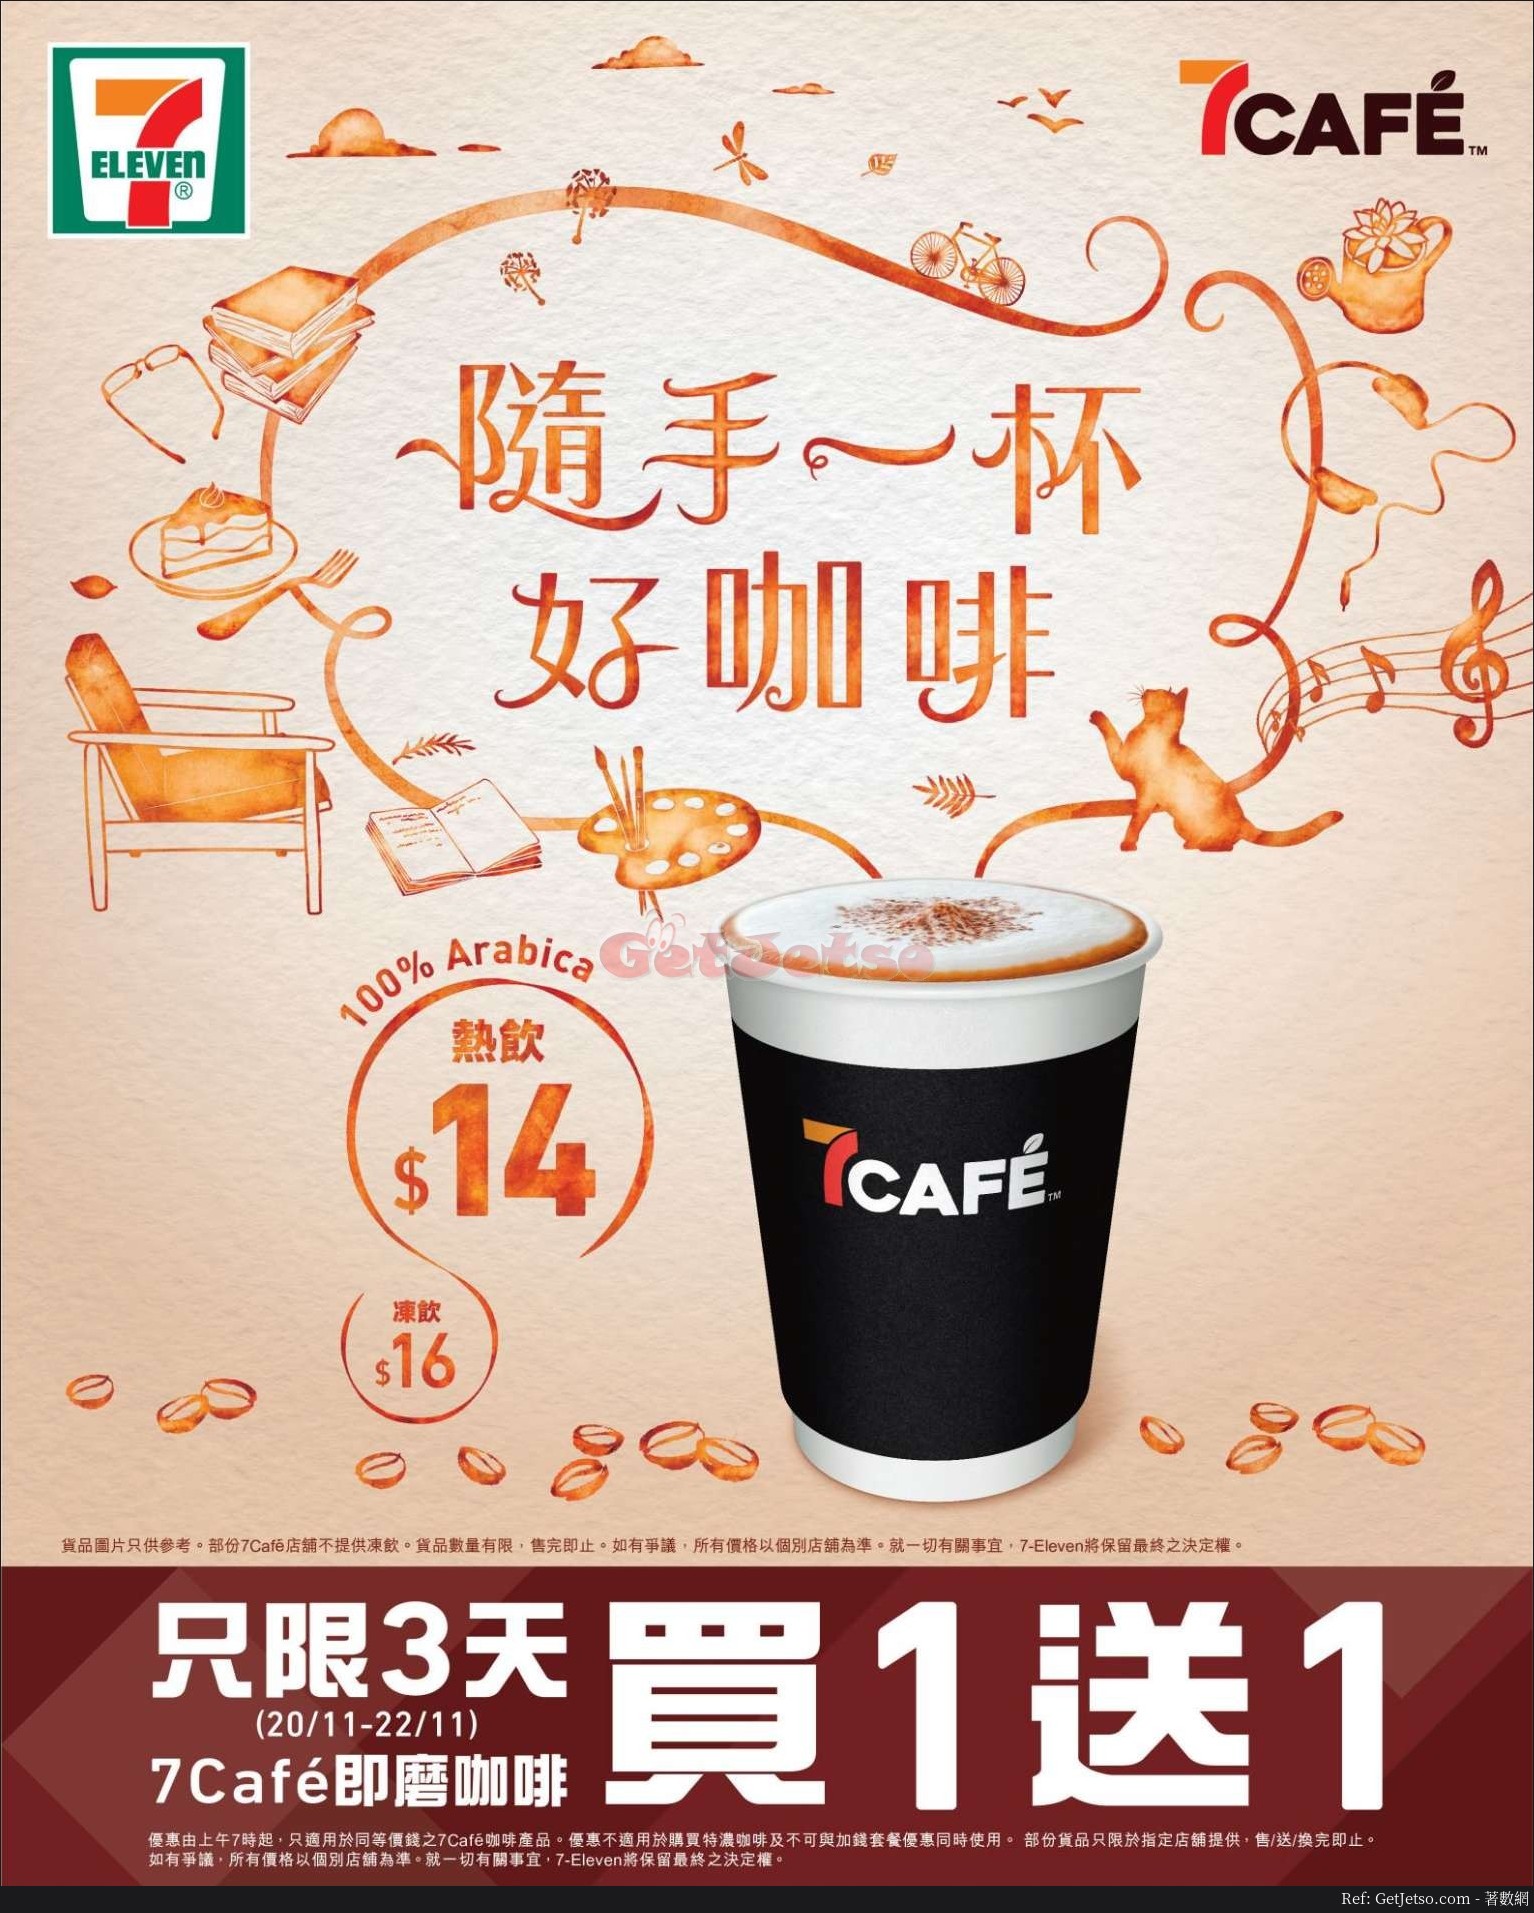 7 Café即磨咖啡買1送1優惠@7-Eleven (19年11月20-22日)圖片1